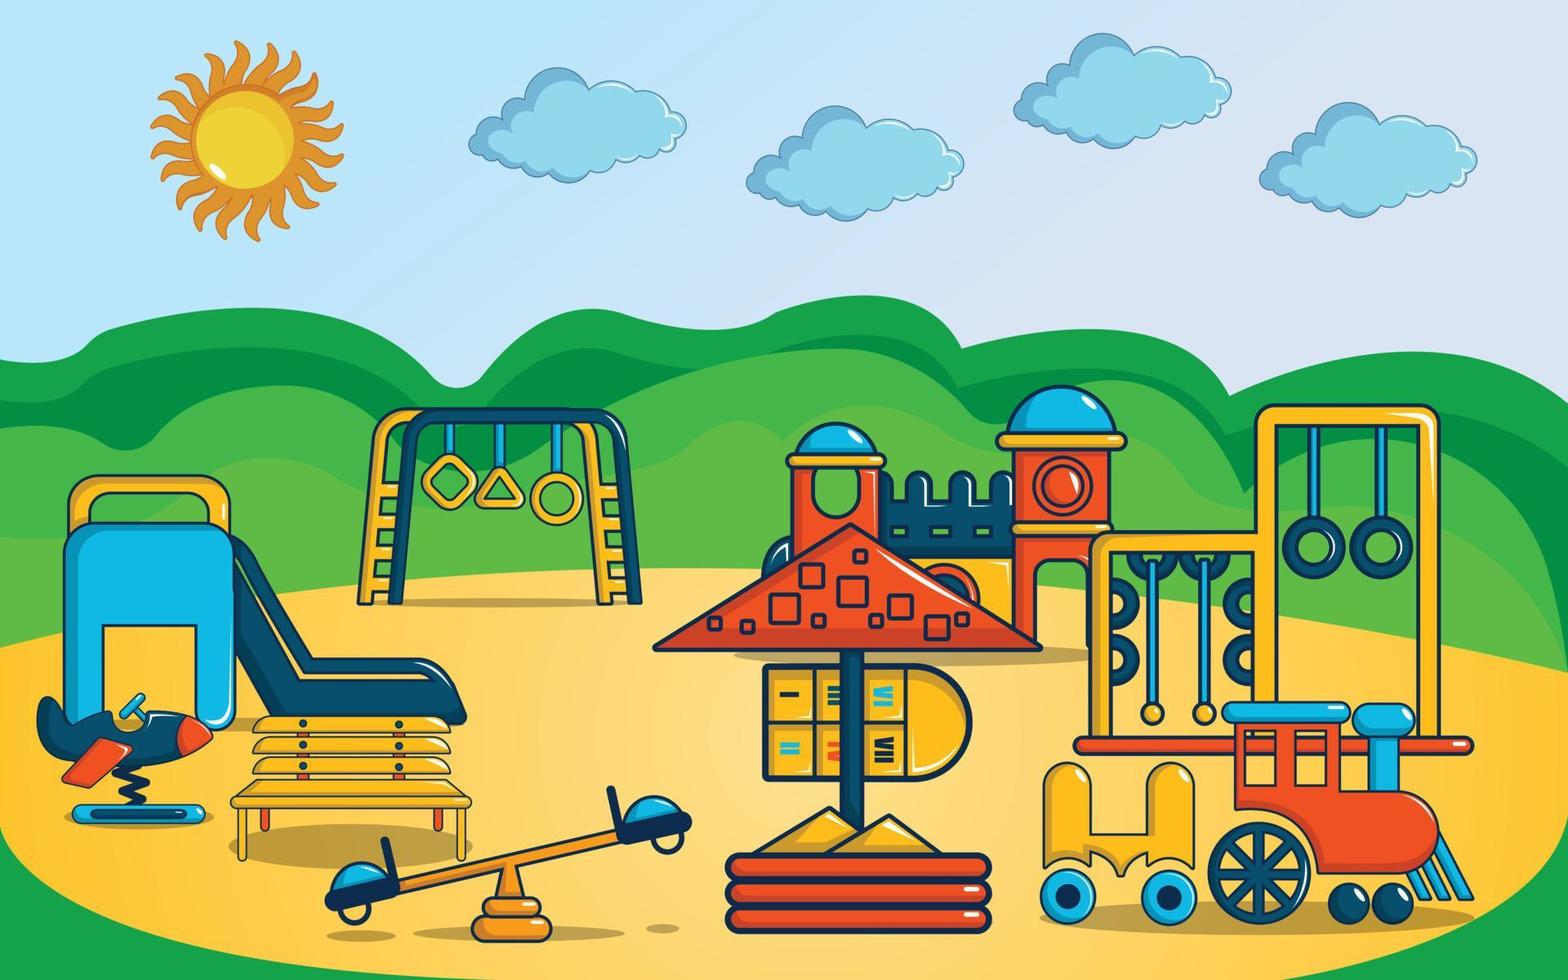 banner de conceito de playground, estilo cartoon vetor